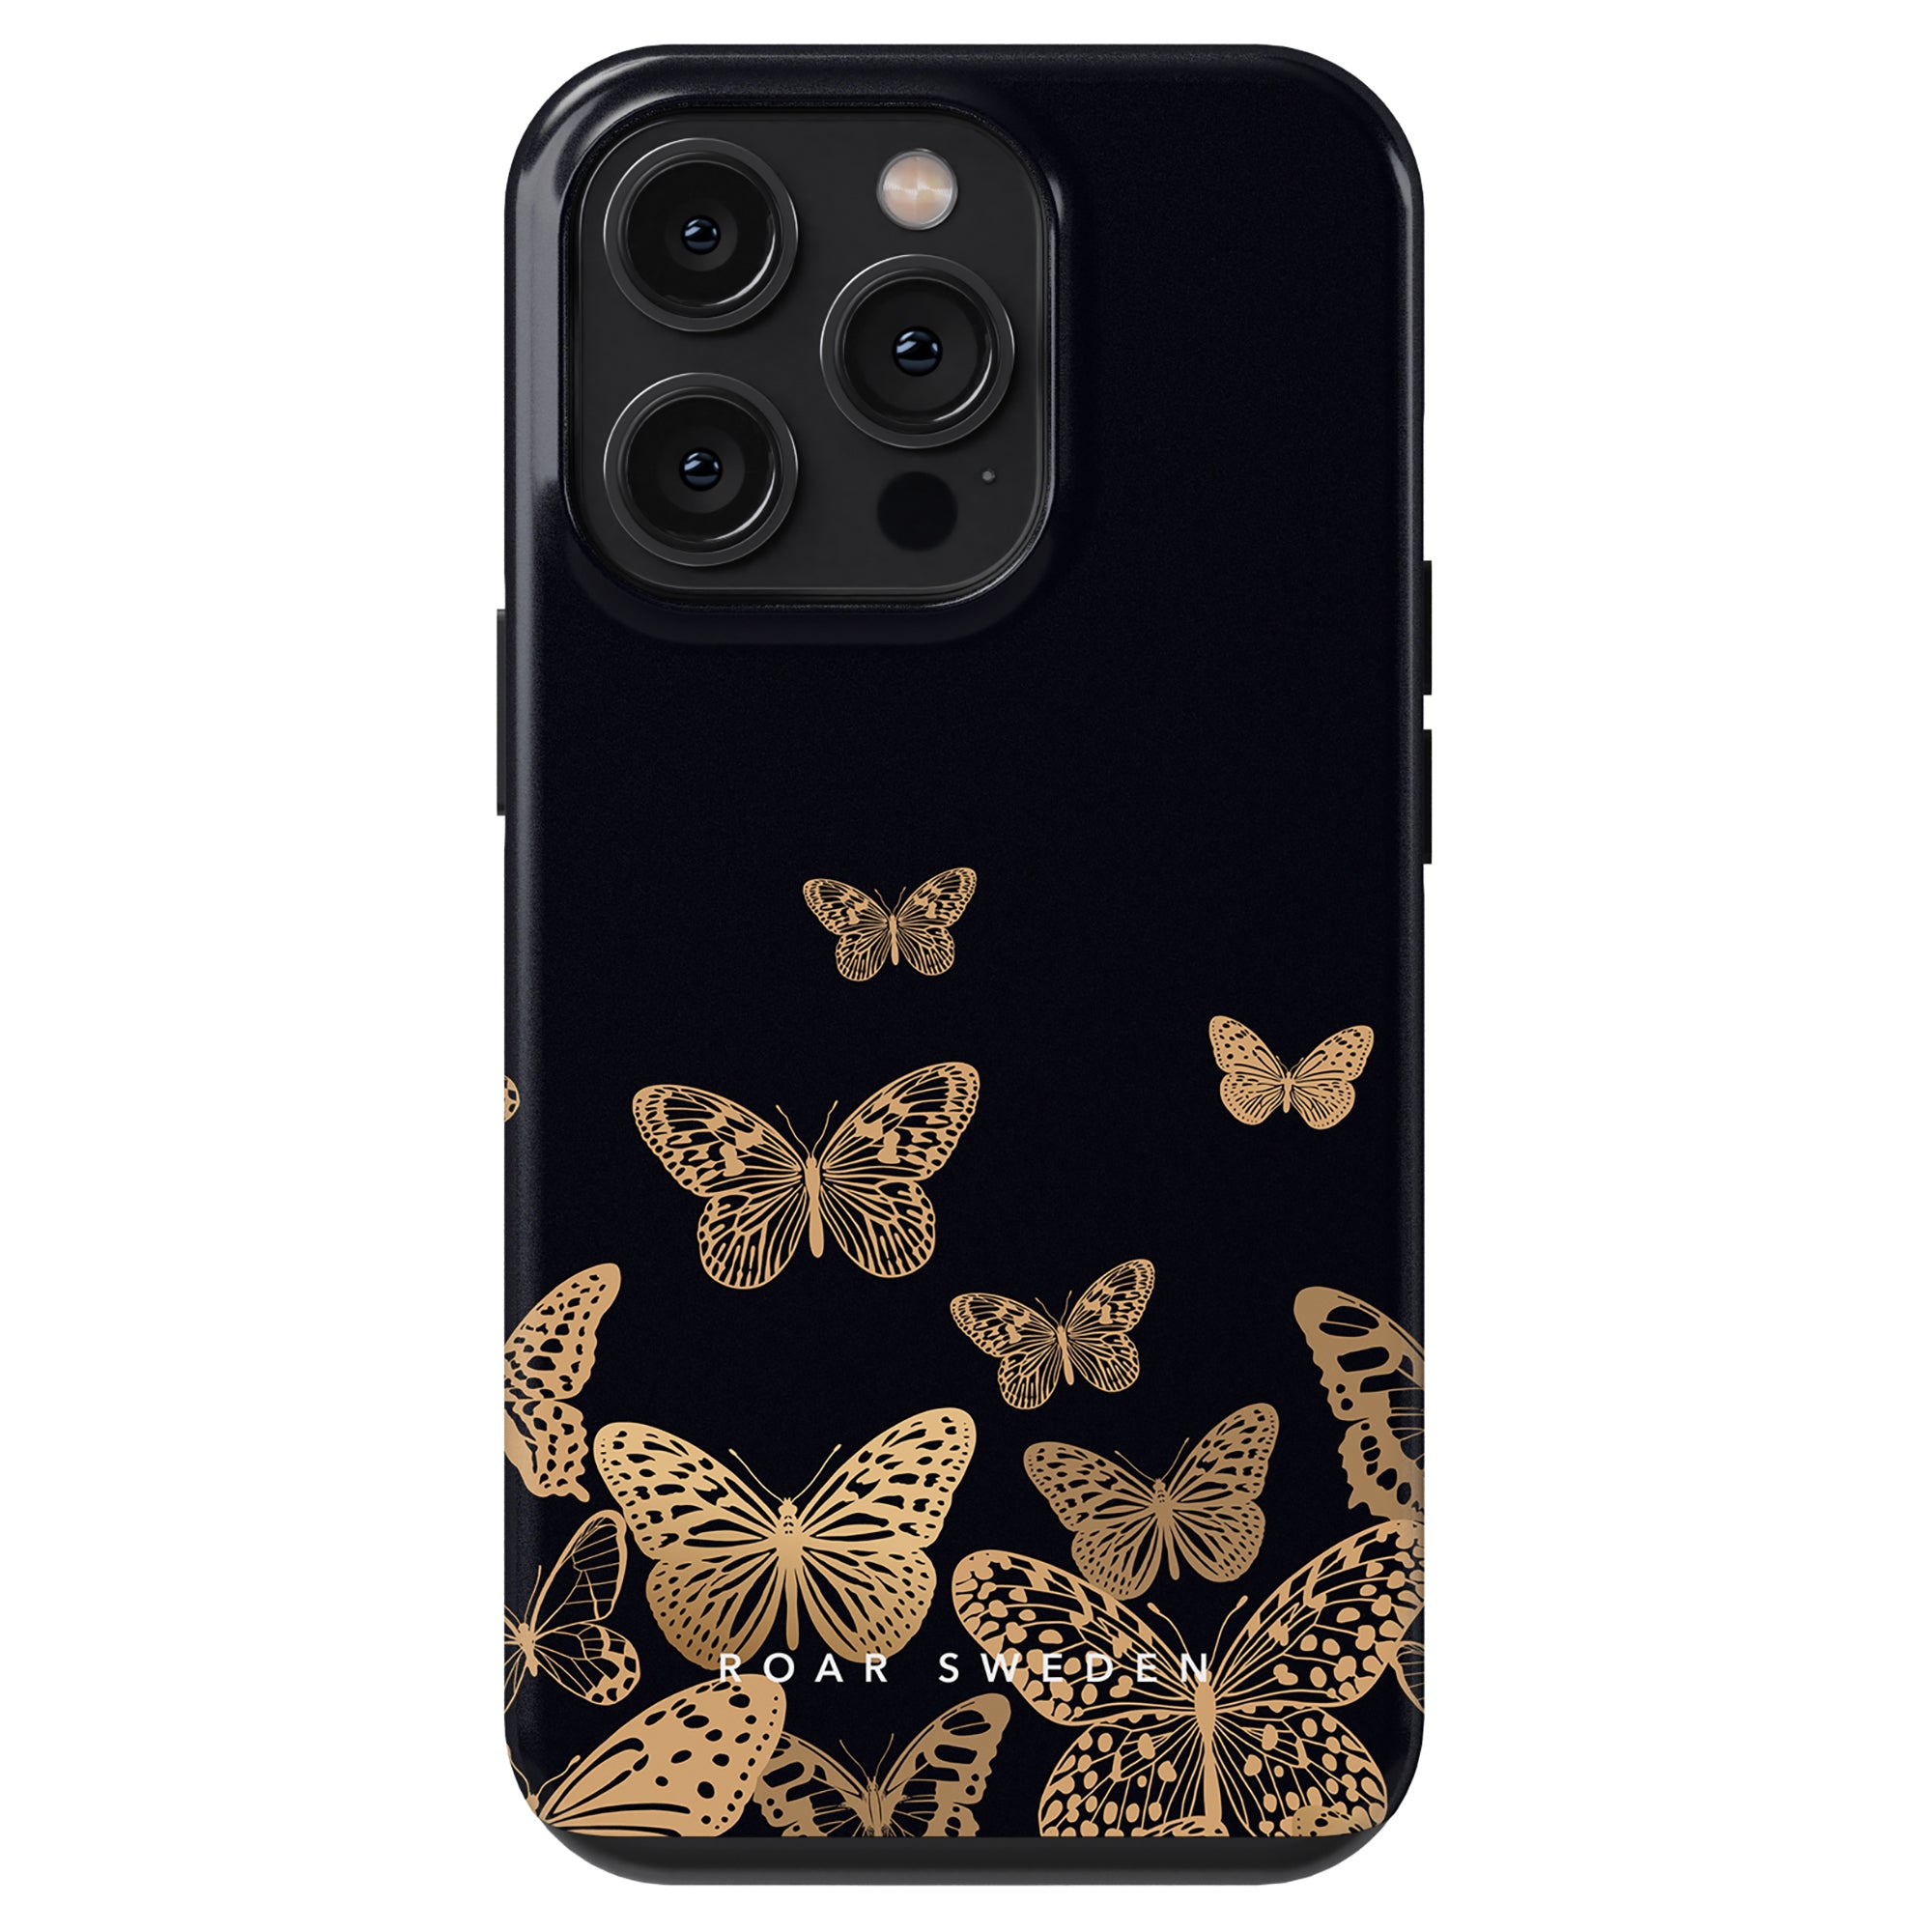 Ett Printeers smartphonefodral med Golden Butterflies - Tough Case på.